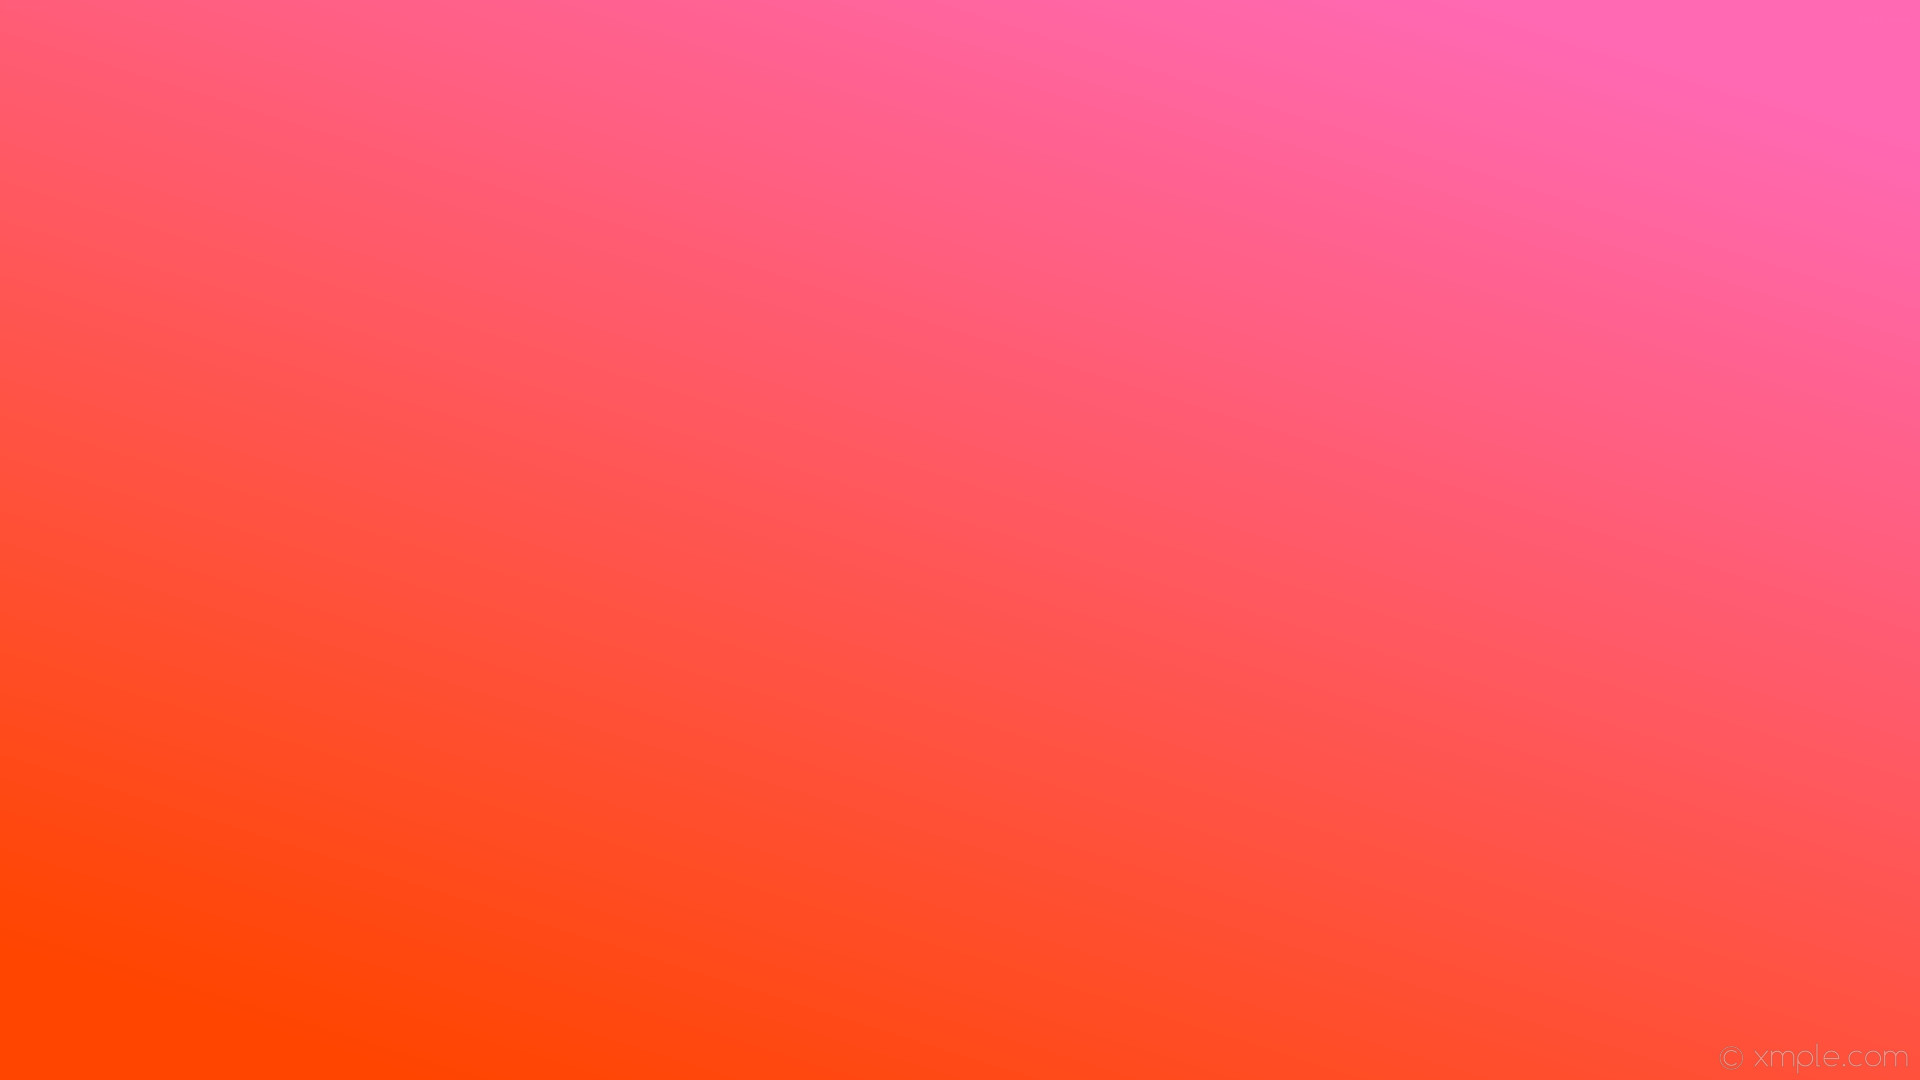 1920x1080 wallpaper pink gradient orange linear hot pink orangered #ff69b4 #ff4500 45Â°